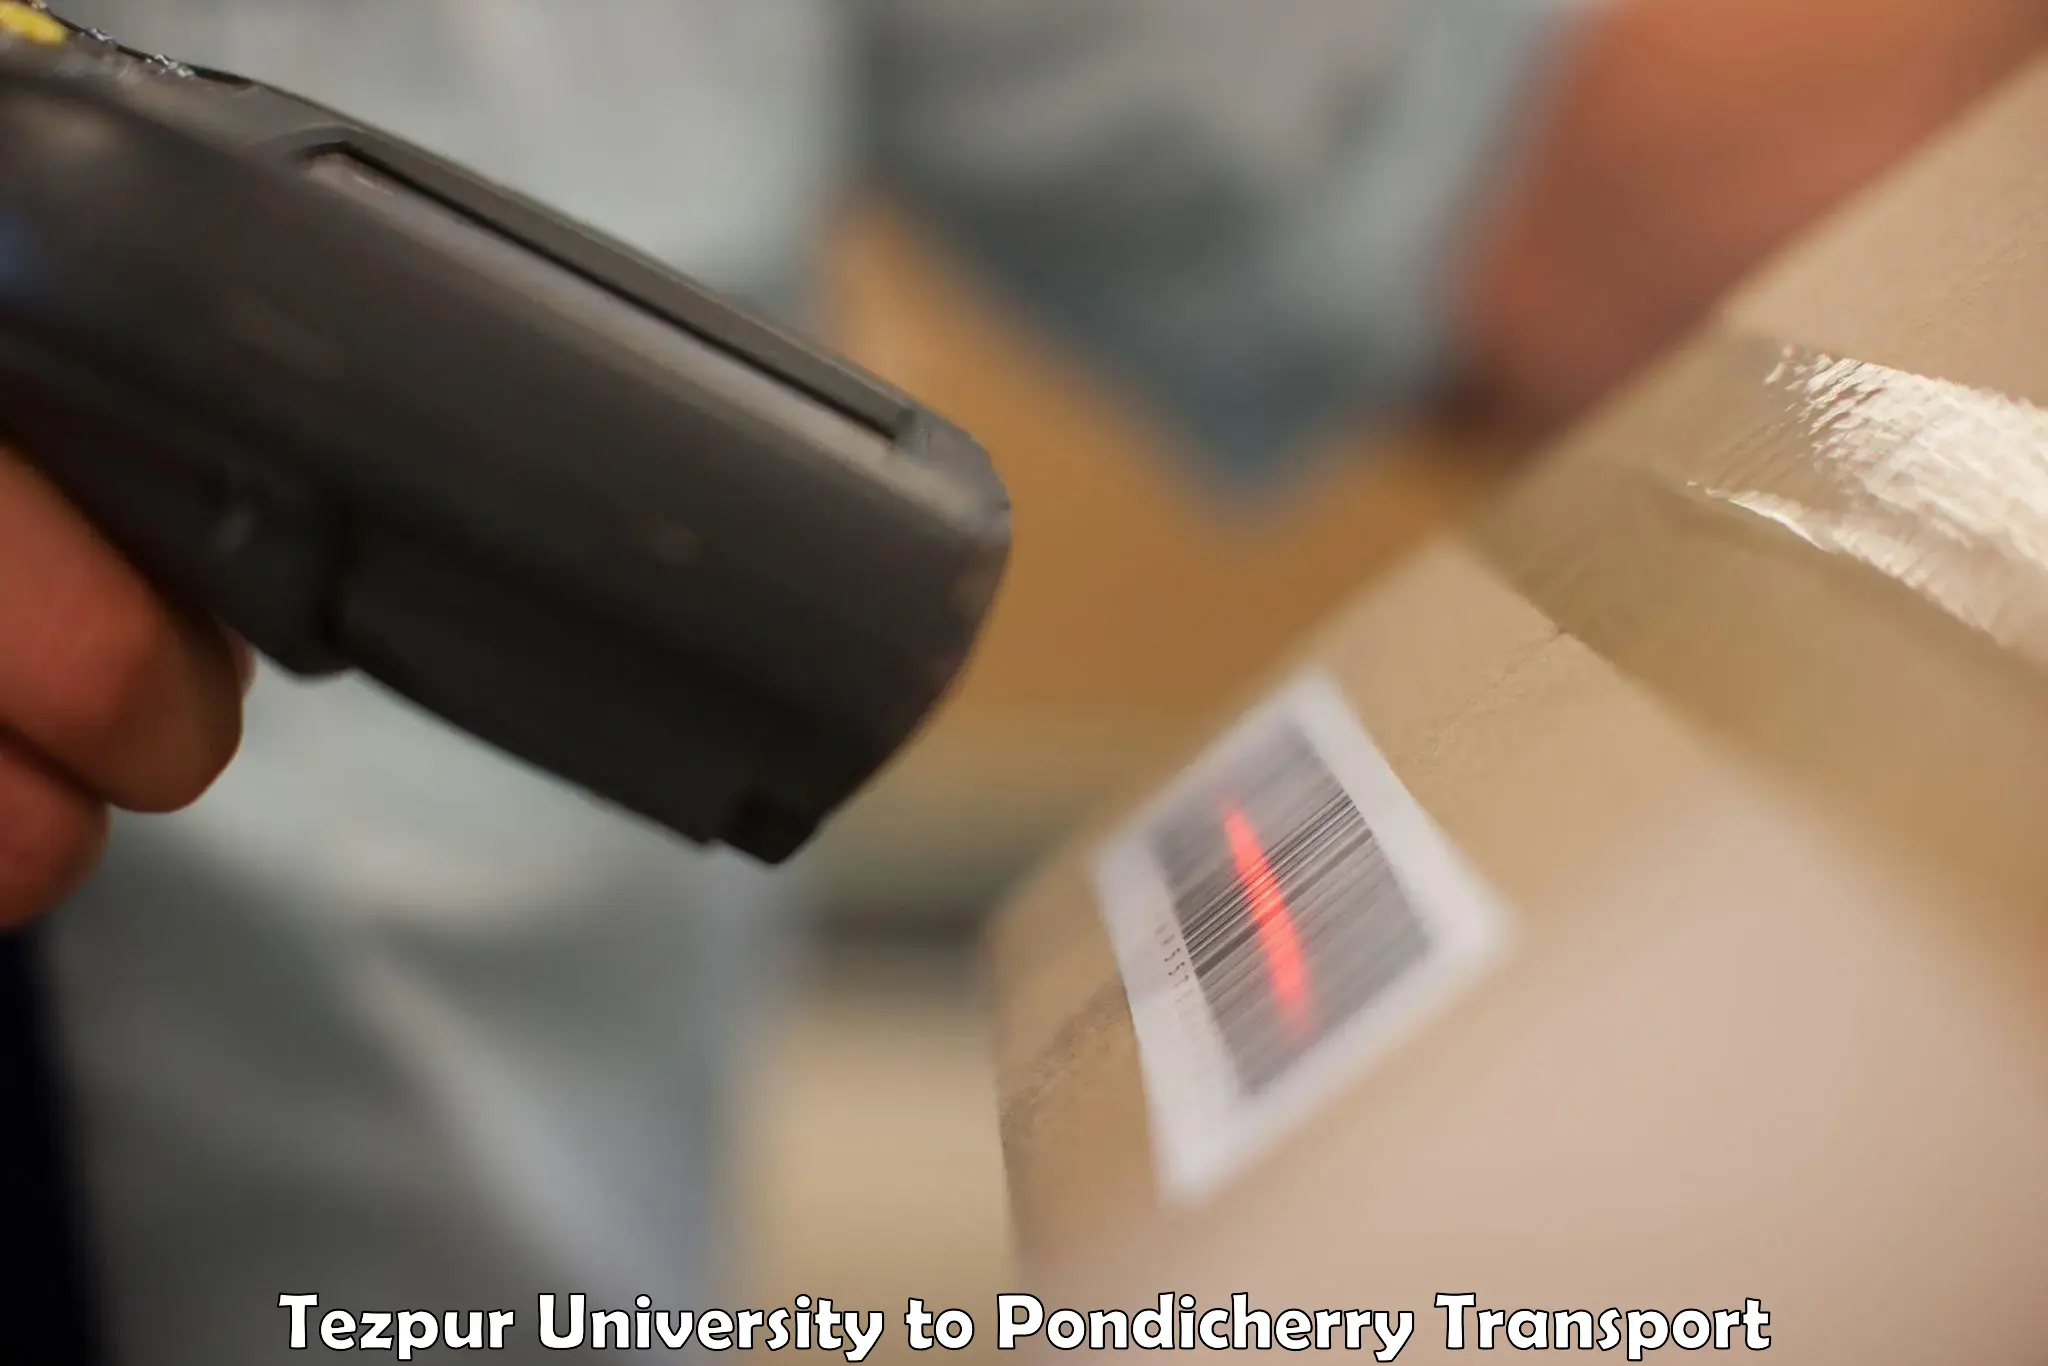 Online transport service Tezpur University to Pondicherry